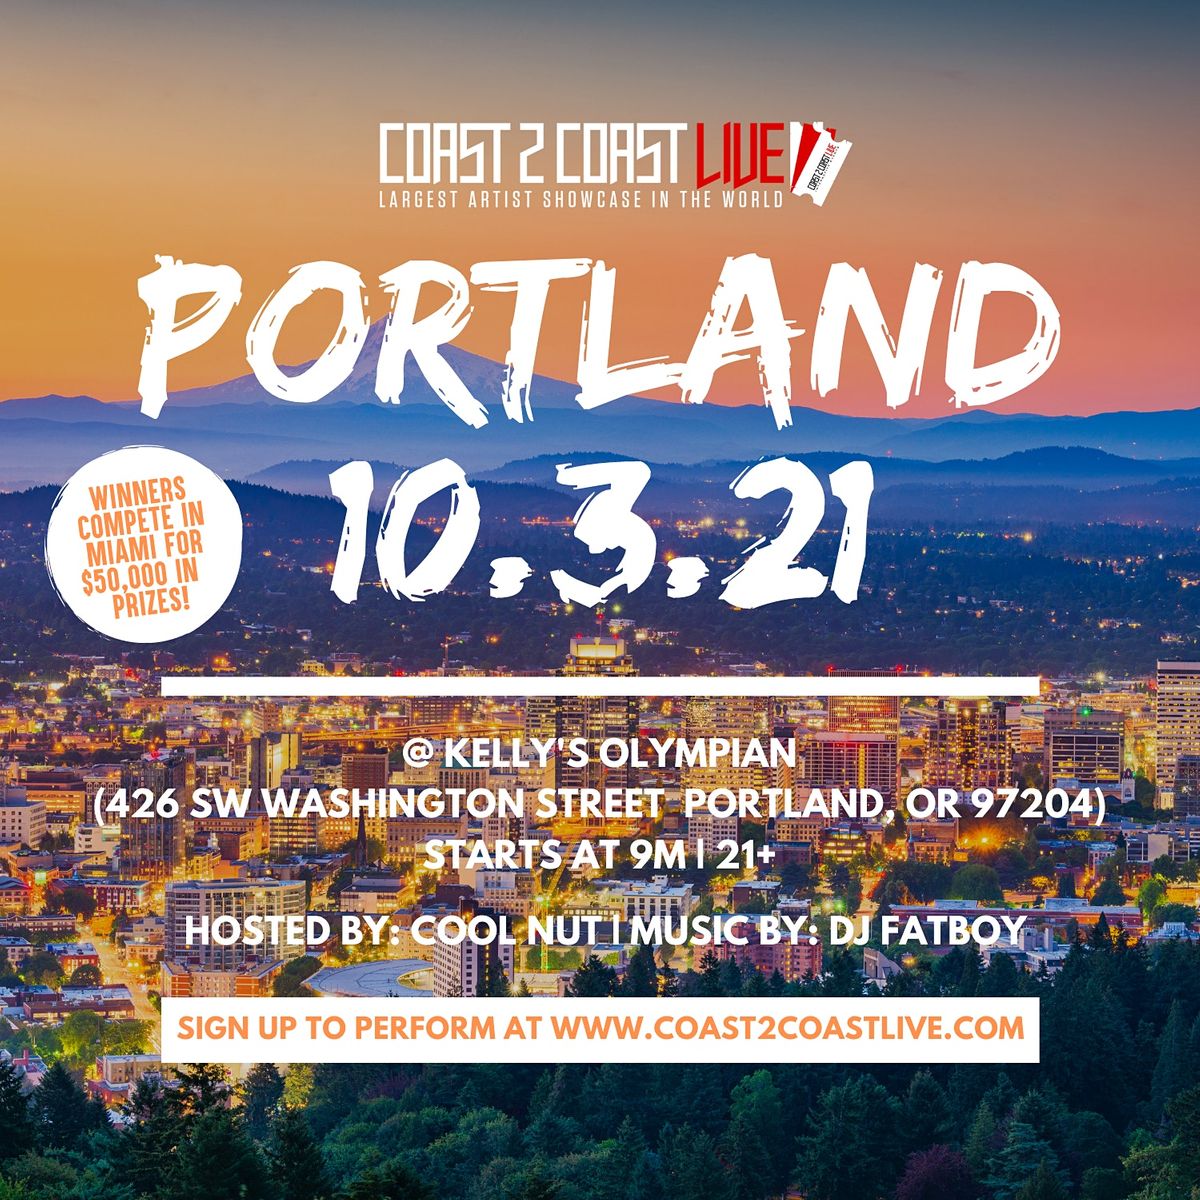 Coast 2 Coast LIVE Showcase Portland - Artists Win $50K In Prizes